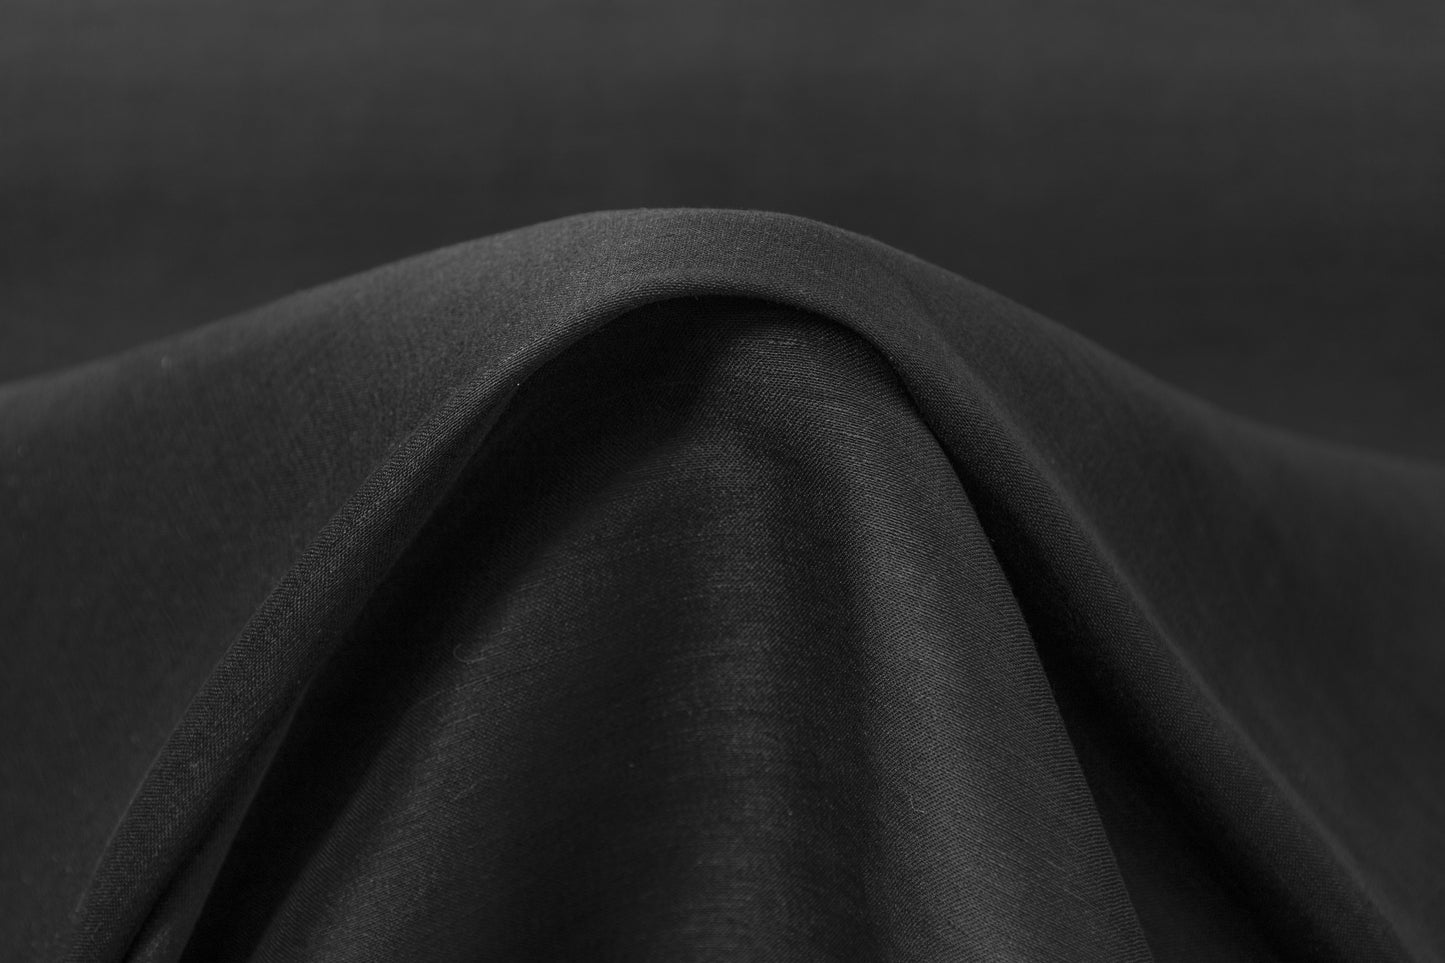 Double Faced Italian Silk Linen Blend - Navy / Black